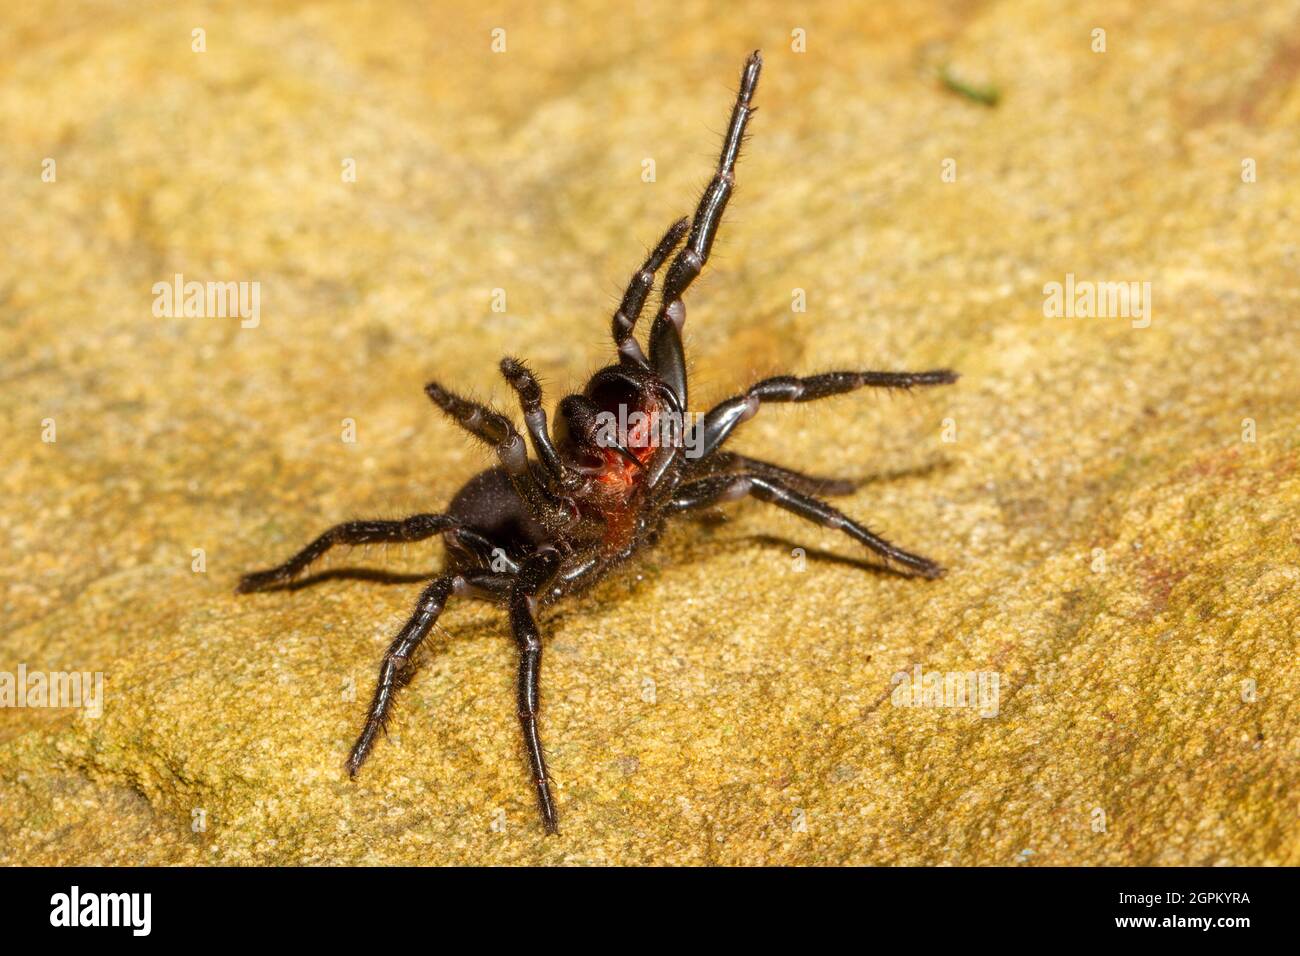 Australian Sydney Funnel Web Spider Foto Stock